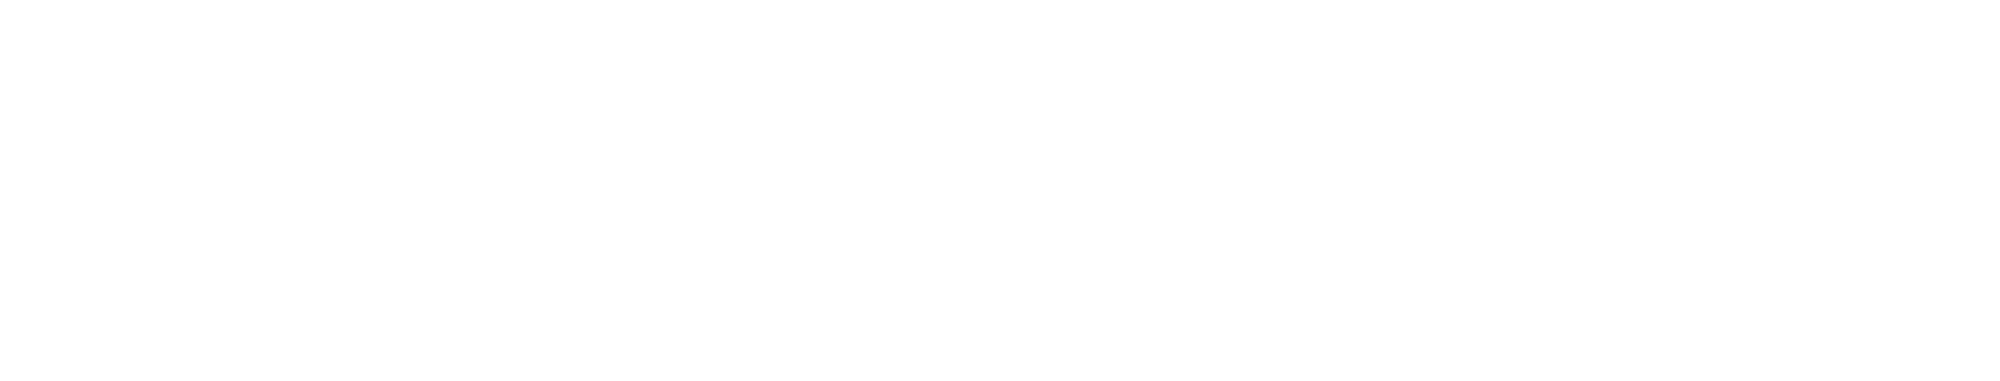 Dedicated Roofing & Exteriors Logo Calgary Roofing Contractors